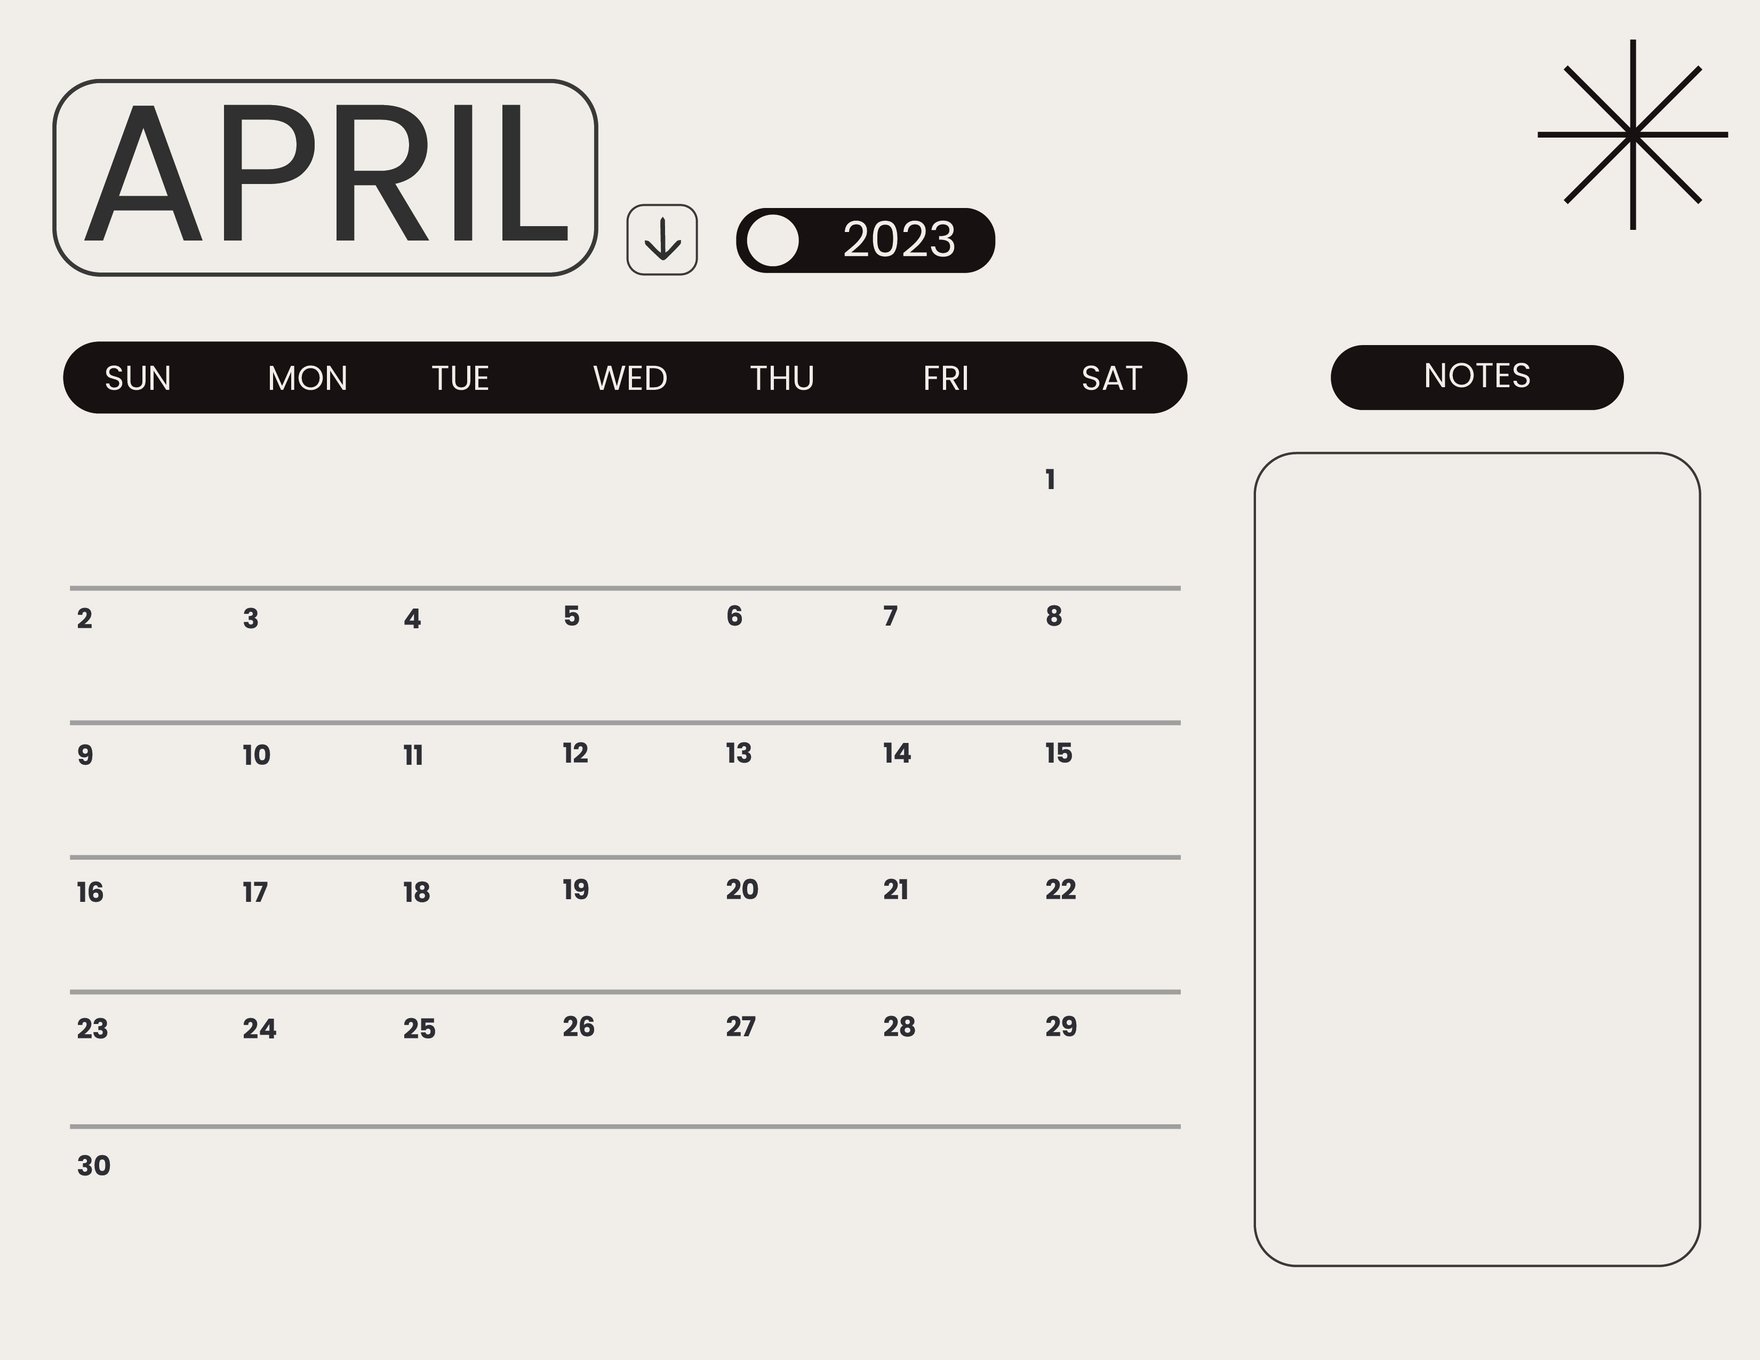 Free Blank April 2023 Calendar Template Download in Word, Illustrator